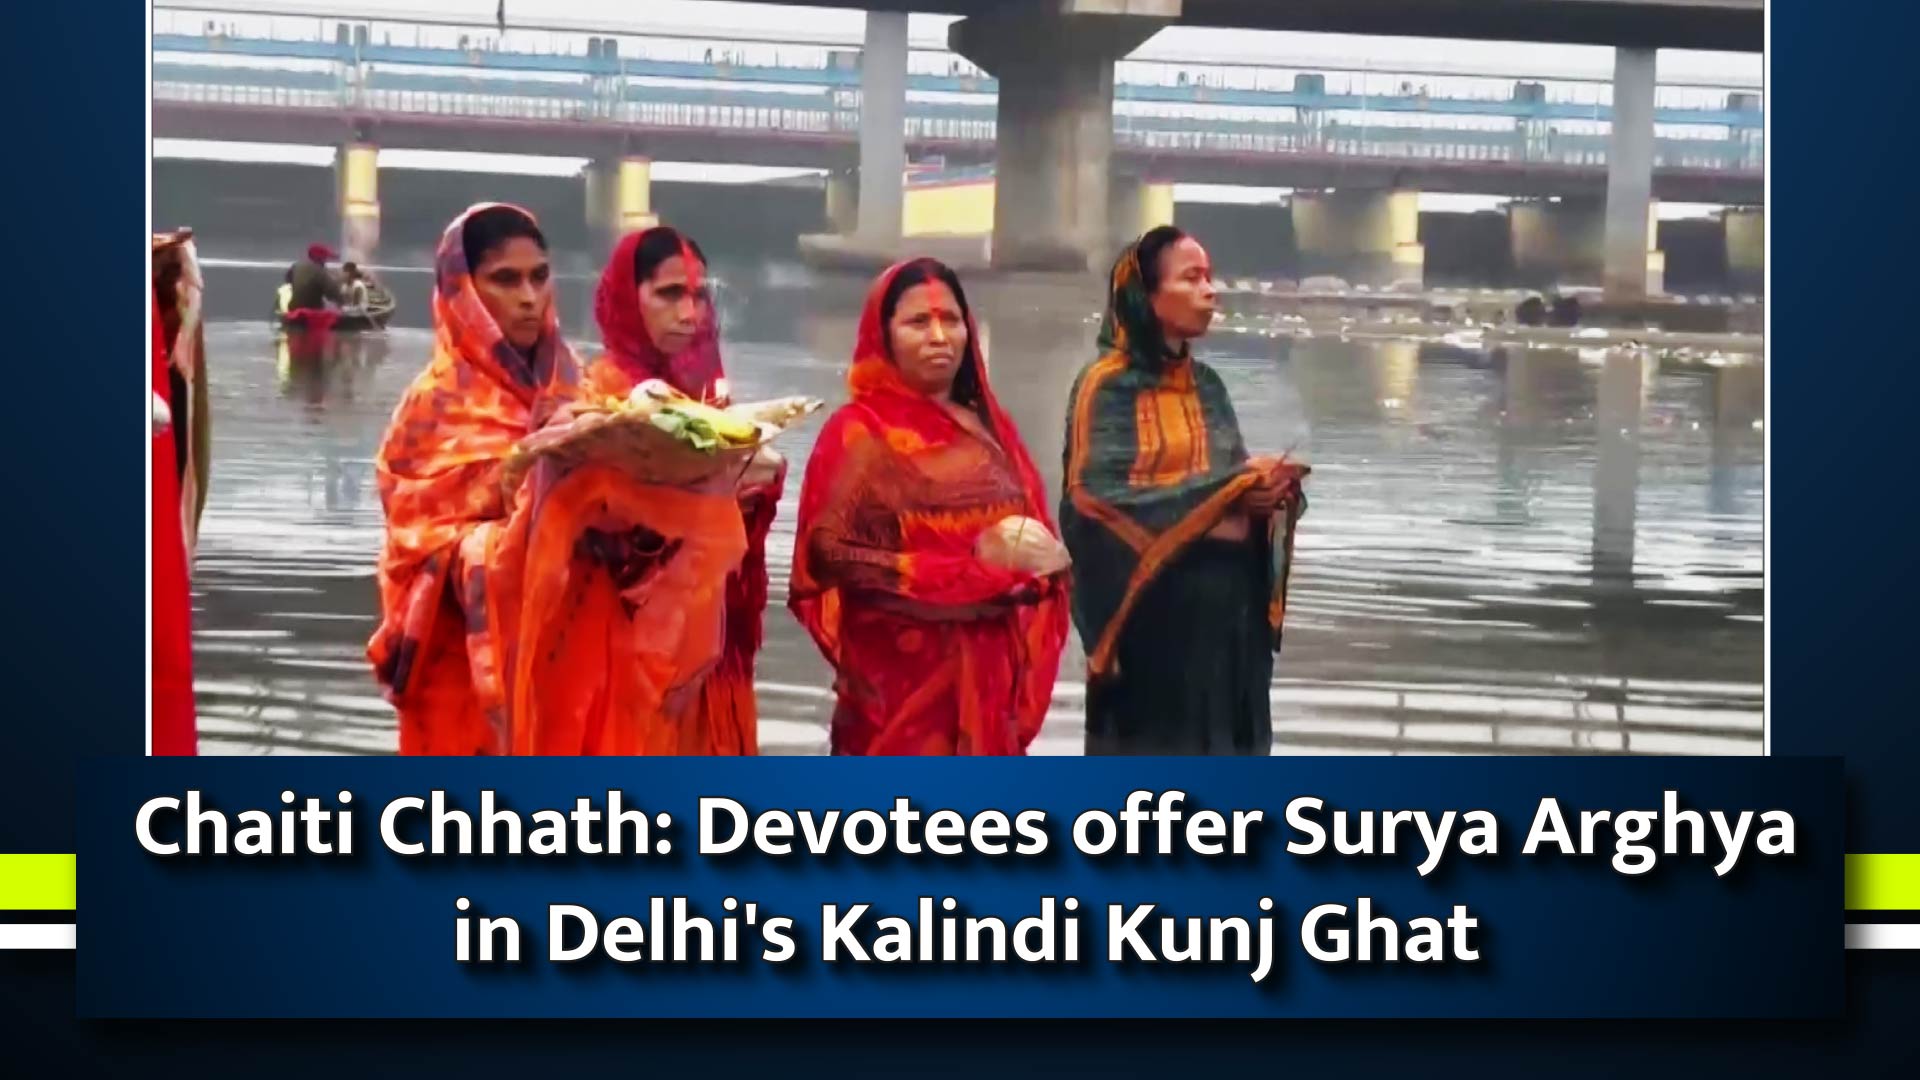 Chaiti Chhath: Devotees offer Surya Arghya in Delhi's Kalindi Kunj Ghat